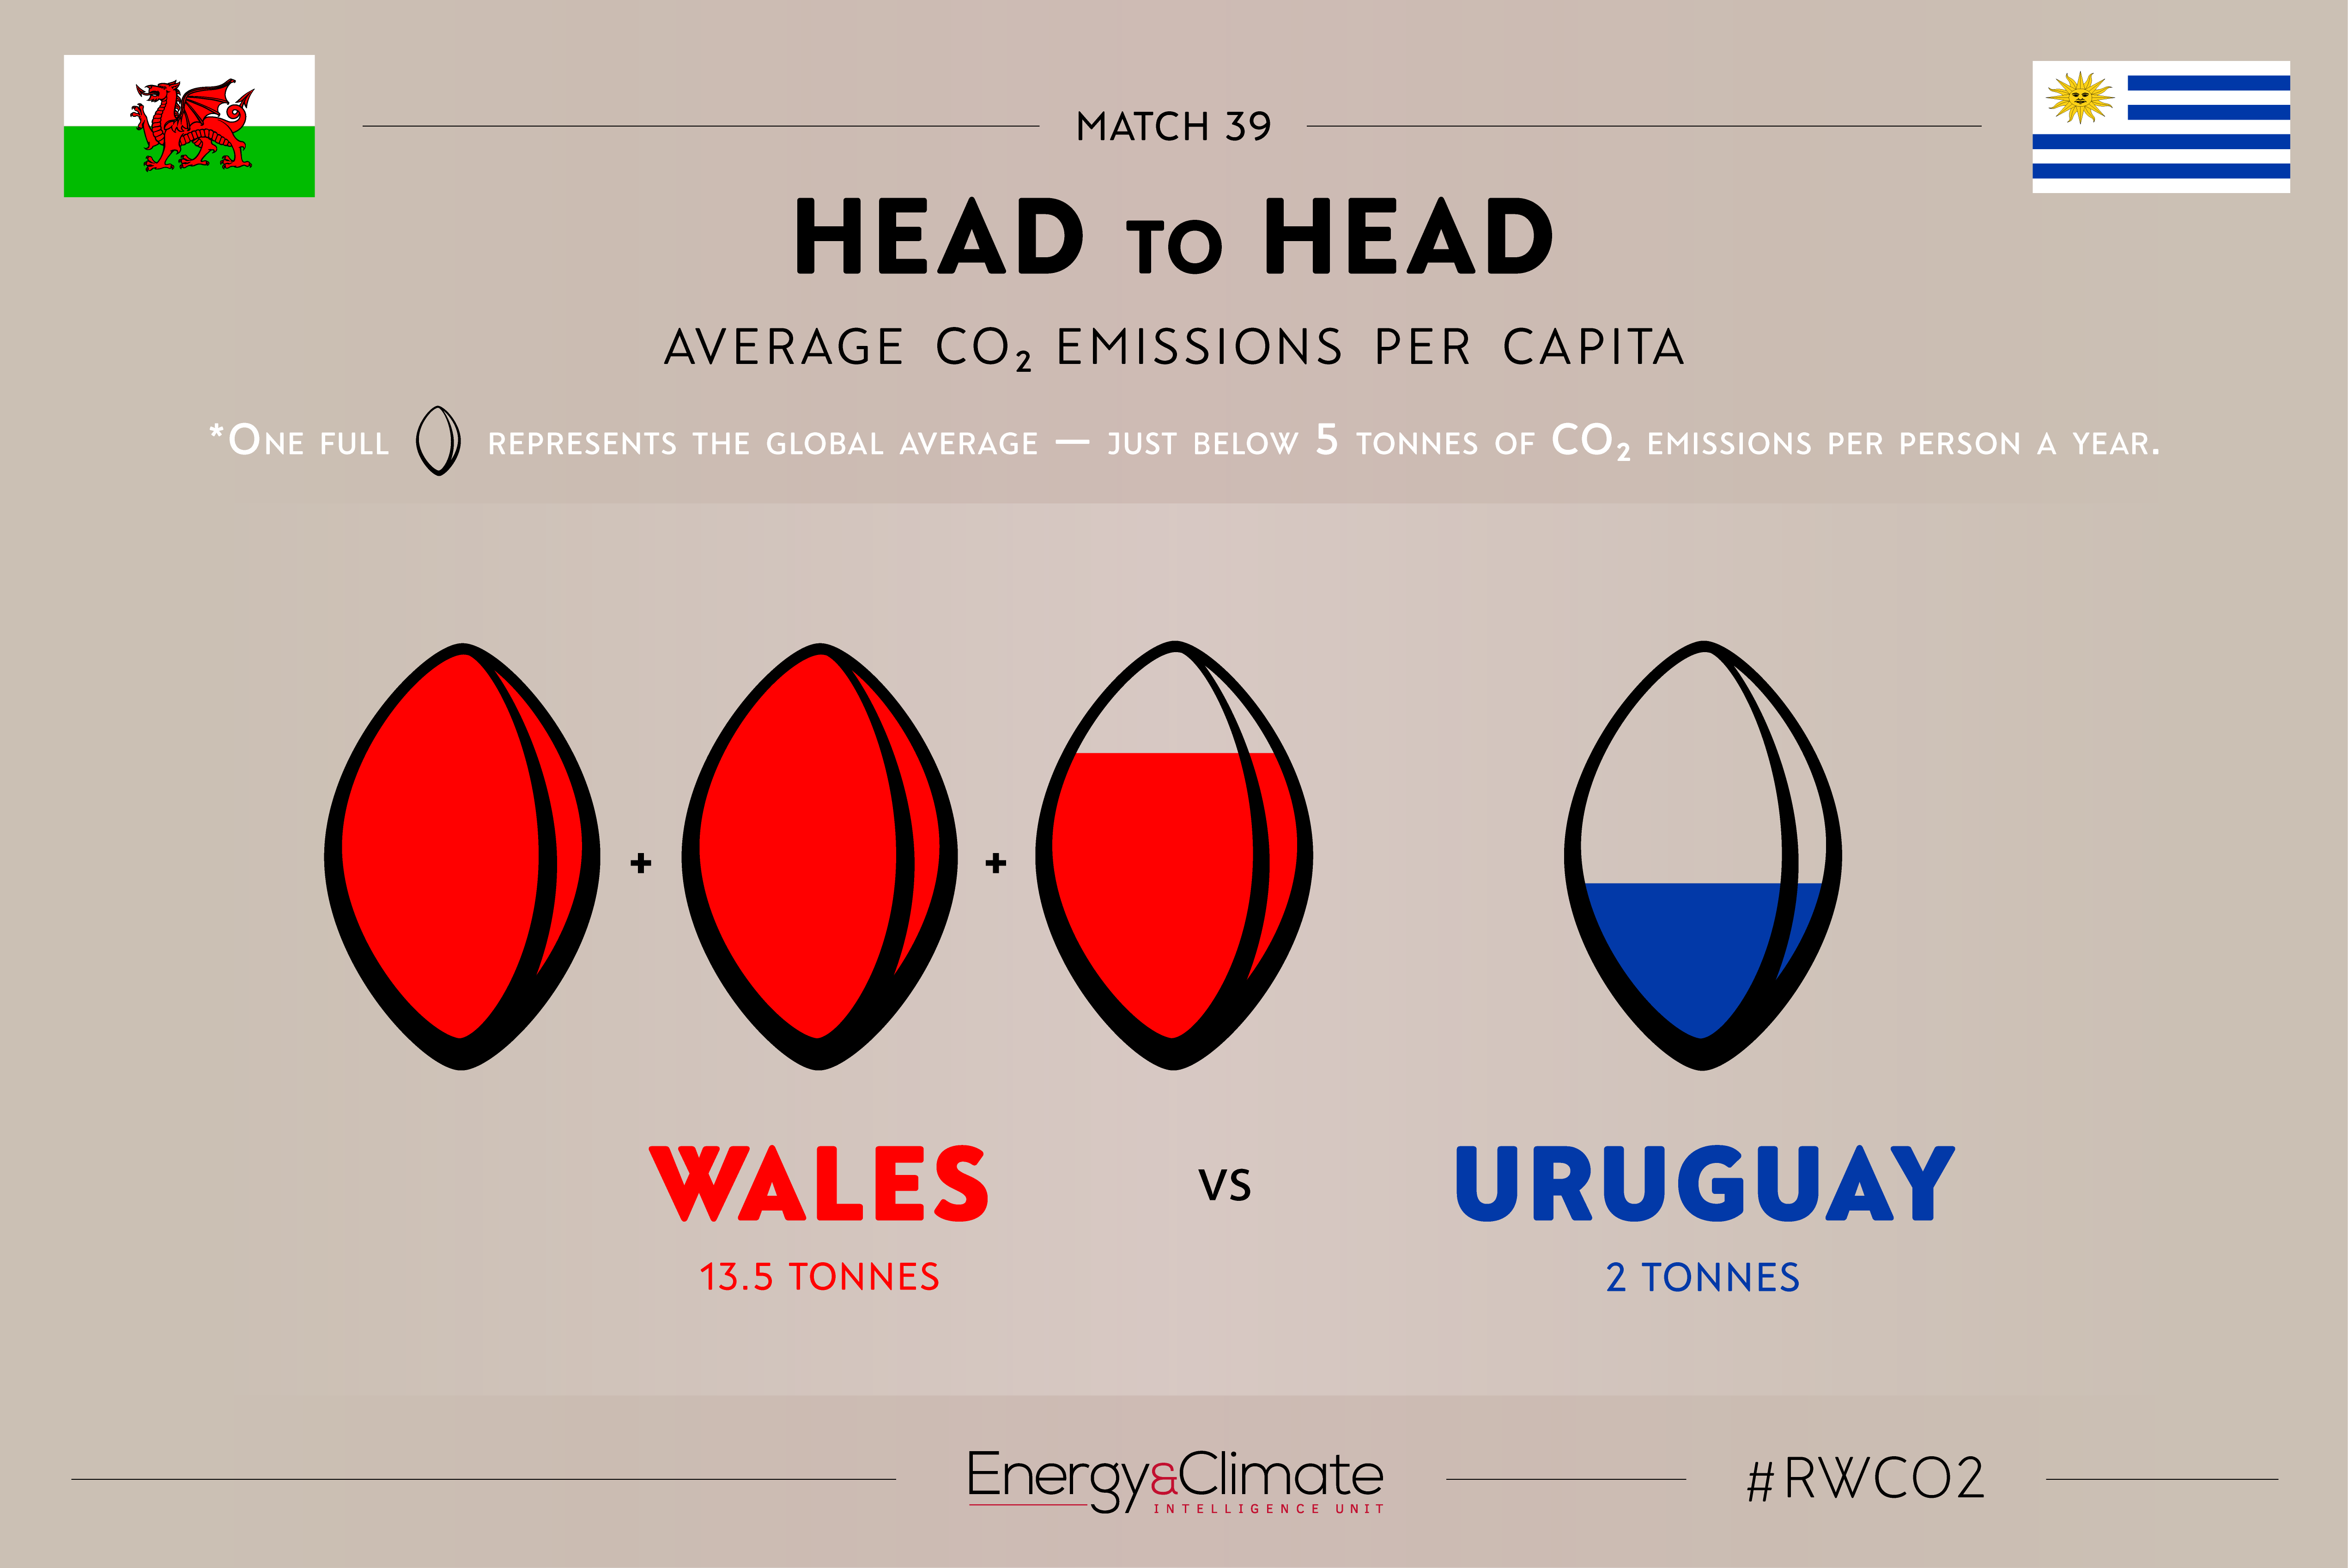 Wales v Uruguay - per capita emissions